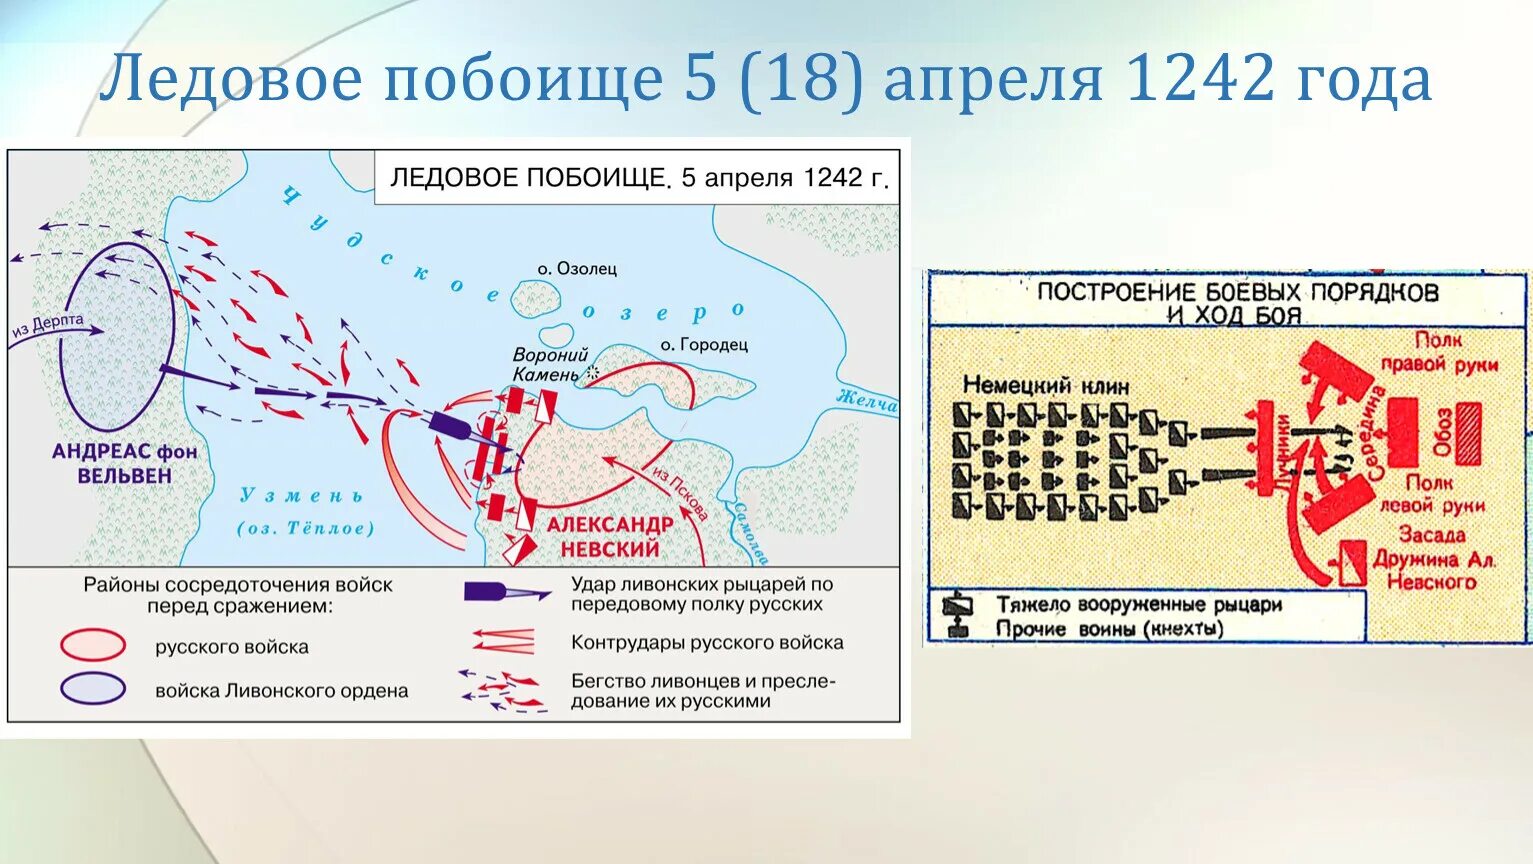 Битва на Чудском озере схема битвы. Битва на Чудском озере 1242 год Ледовое побоище карта.